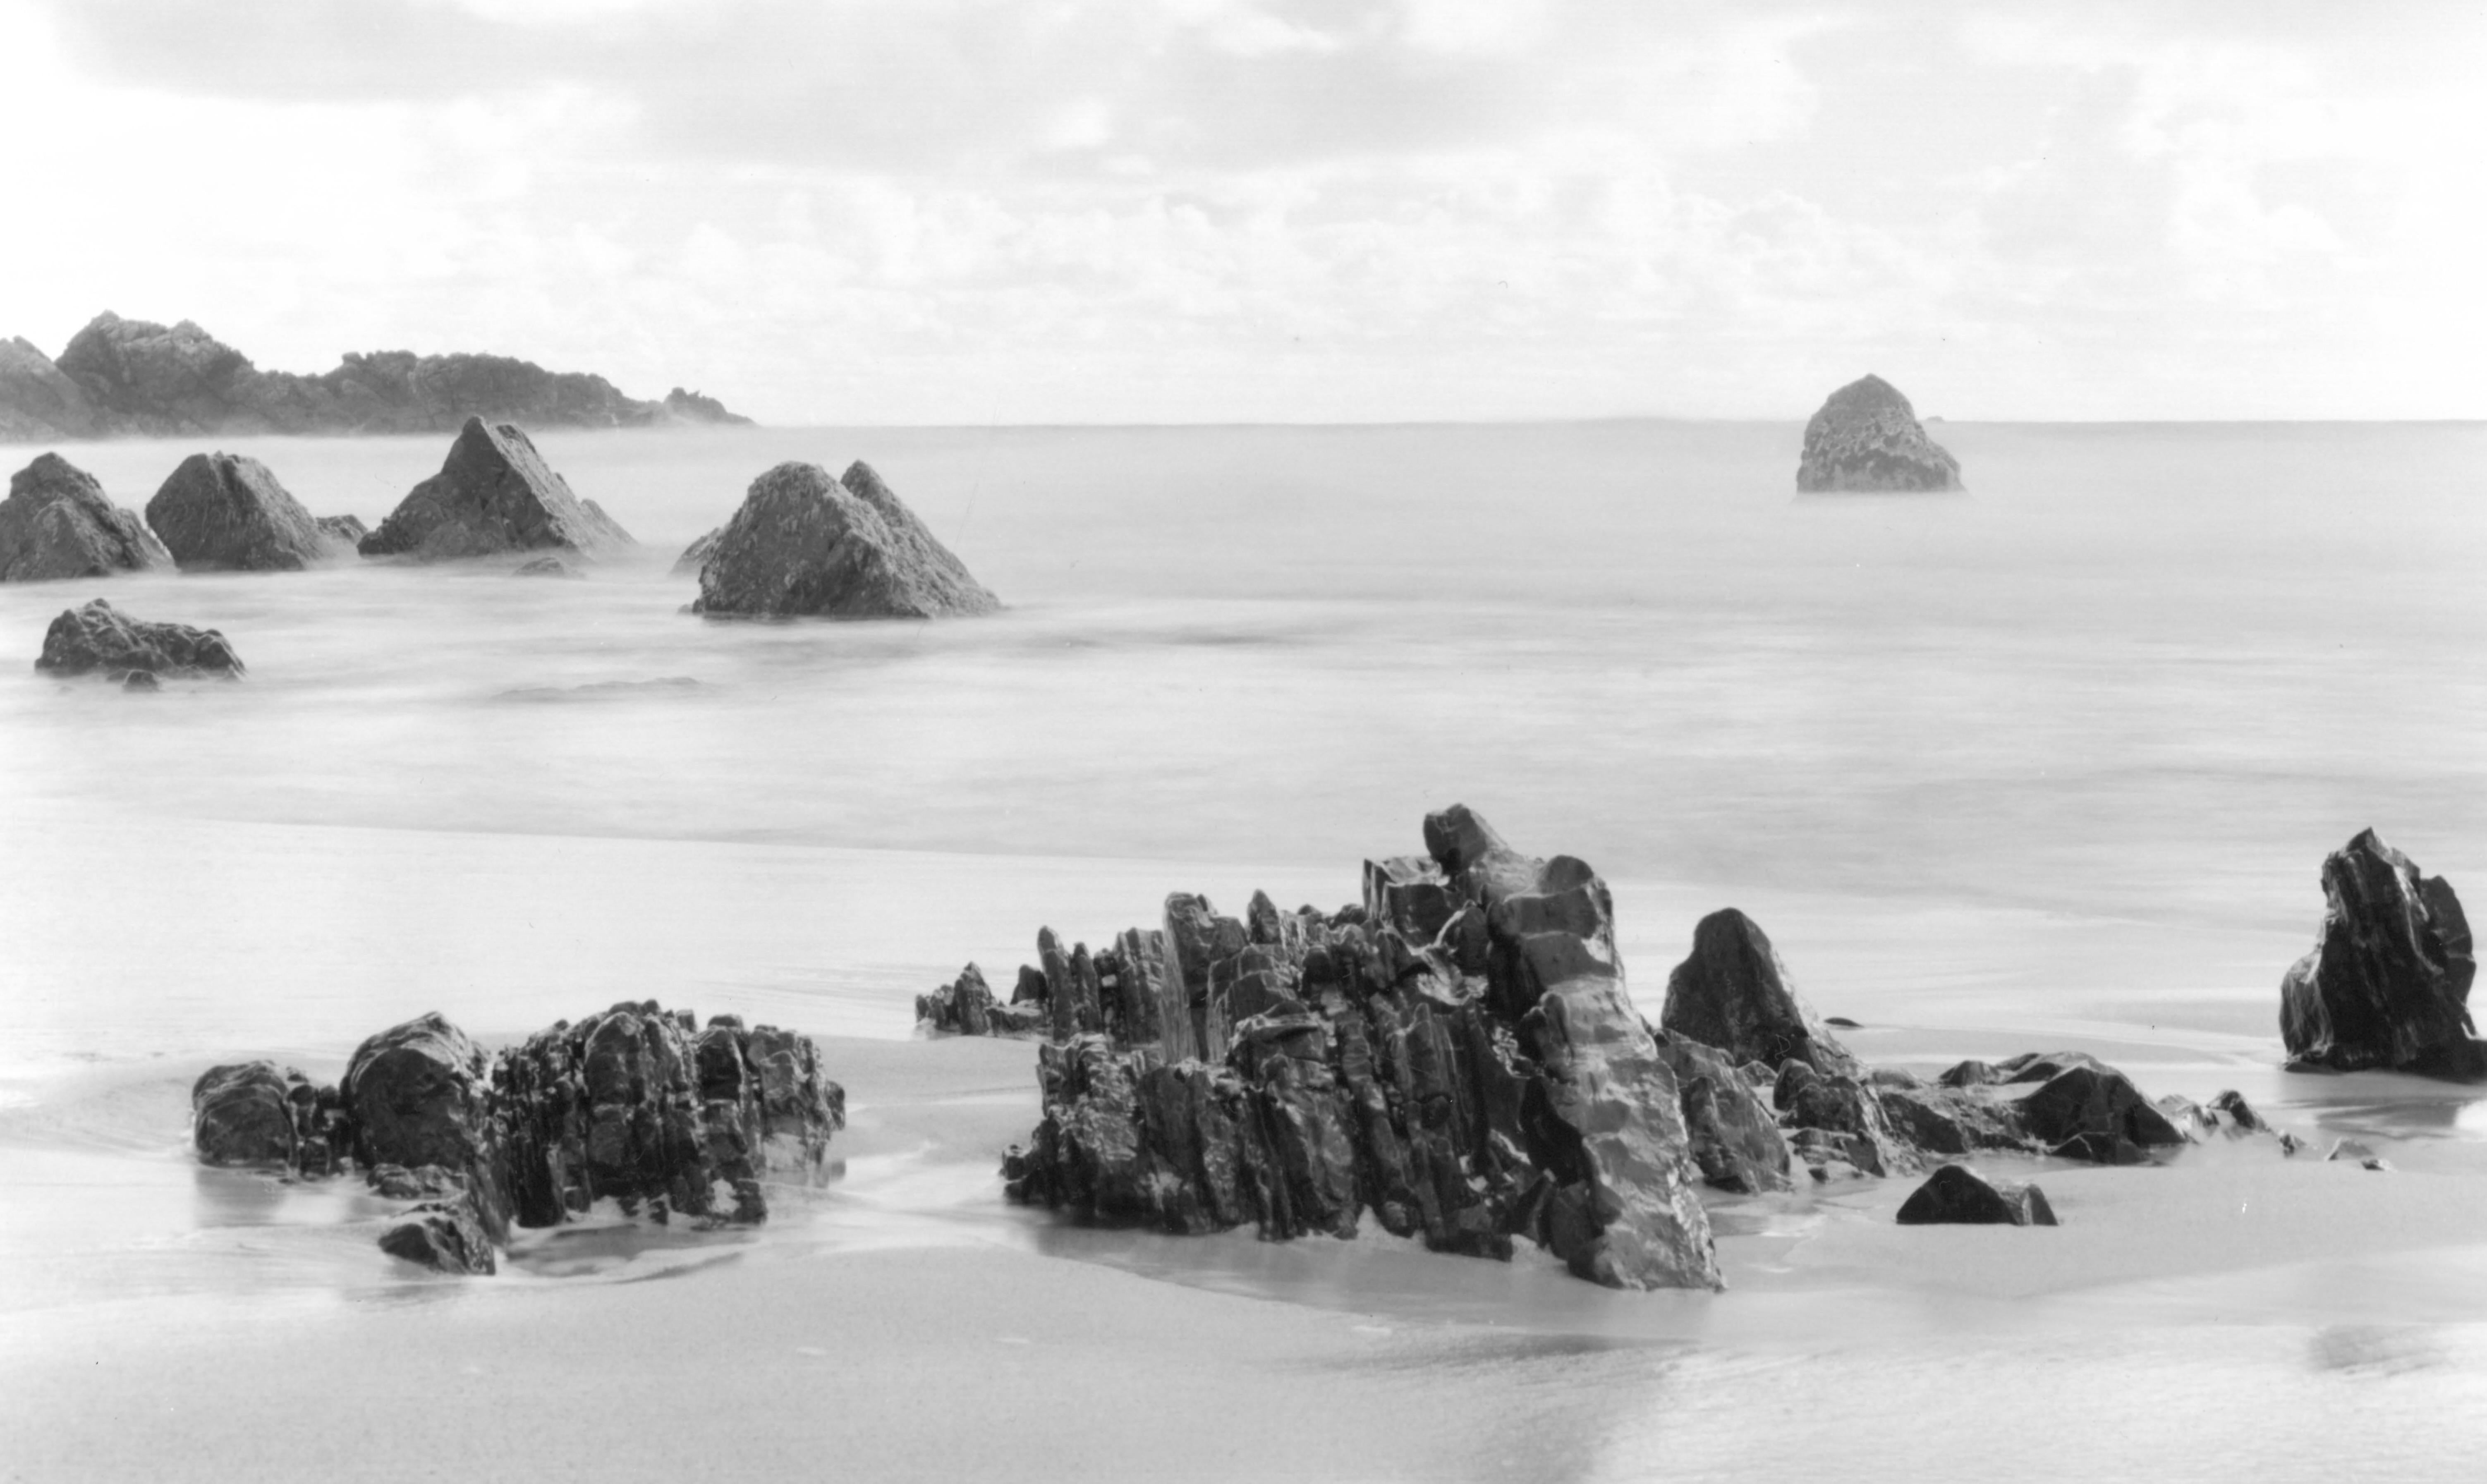 Rachell Hester Black and White Photograph - "Garrapata Beach" An Dreamy Silver Gelatin Photograph of a Foggy Shoreline